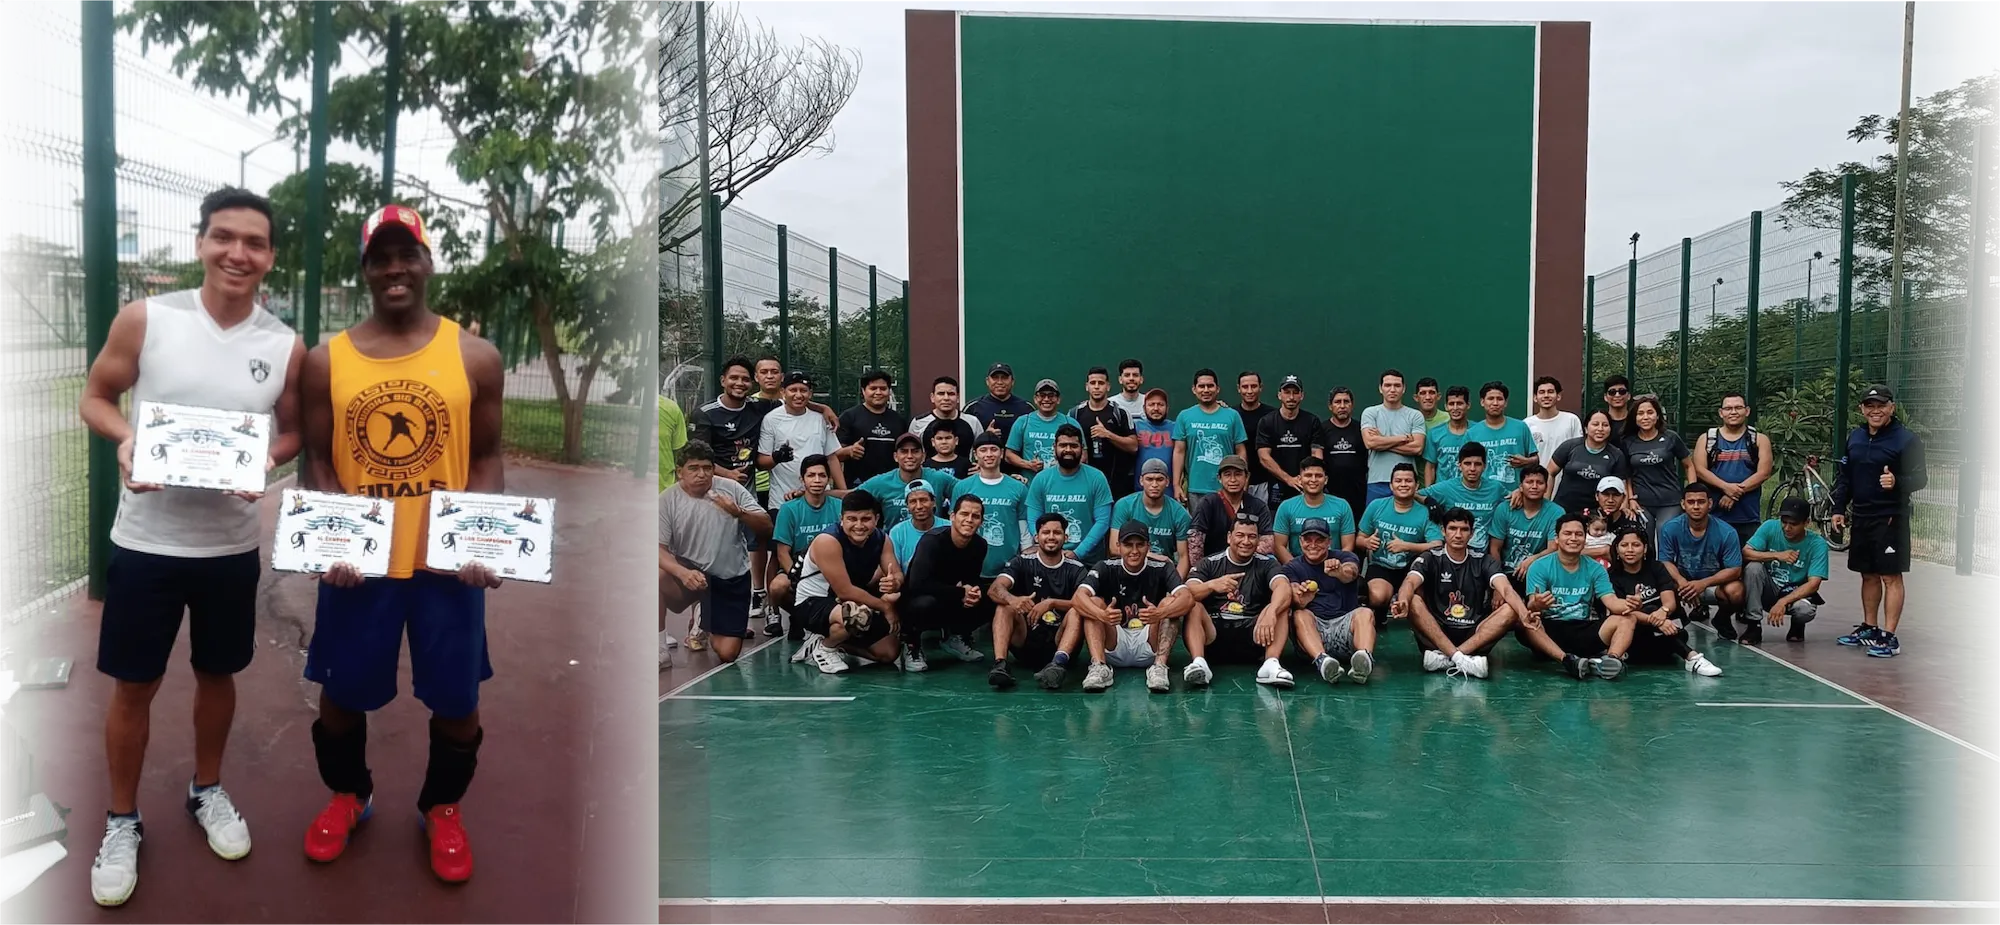 fortclub organizando torneos de wallball - handball - one wall handball